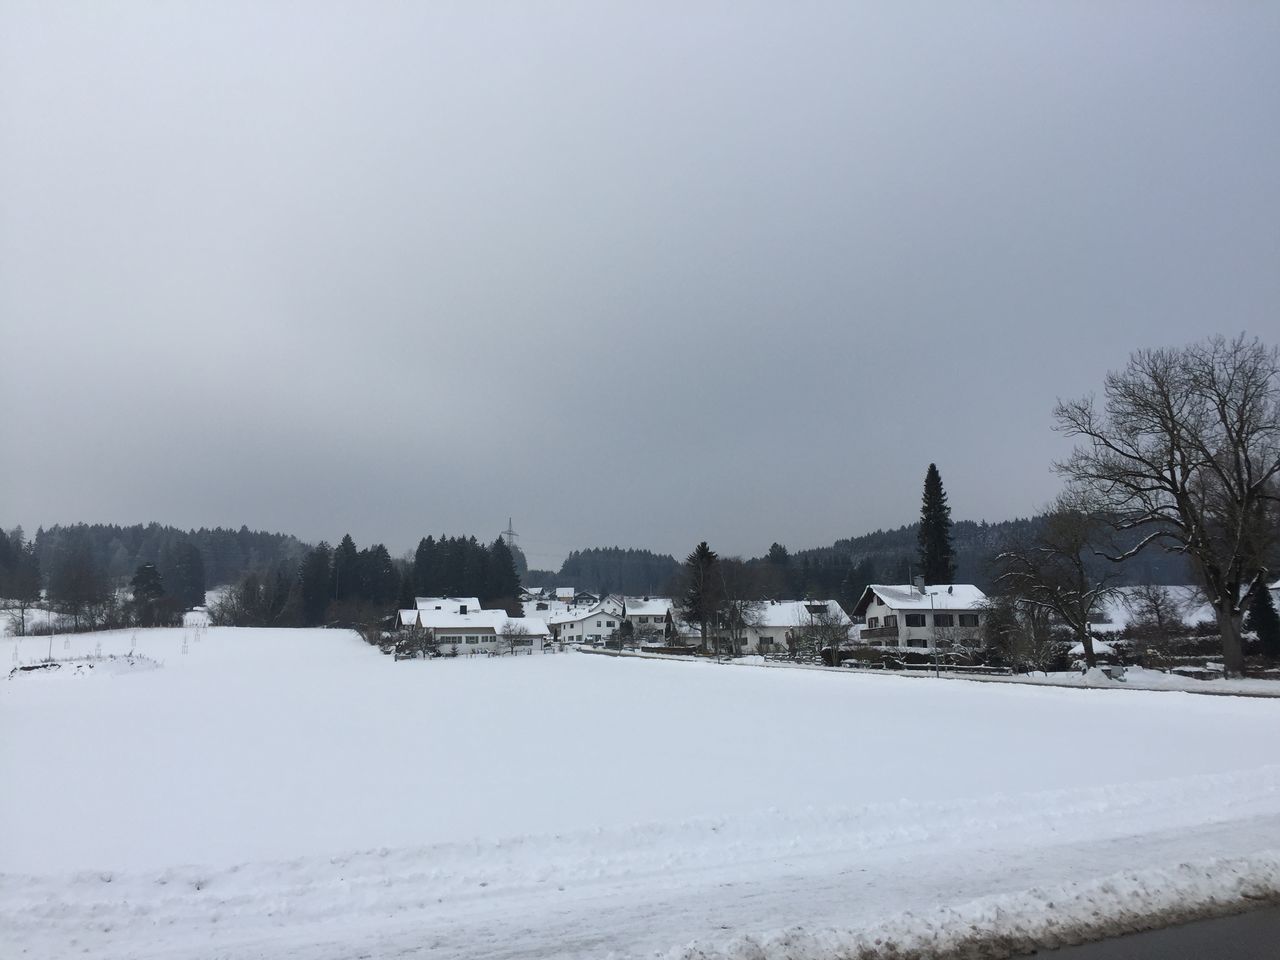 HOUSES ON SNOW LANDSCAPE AGAINST CLEAR SKY